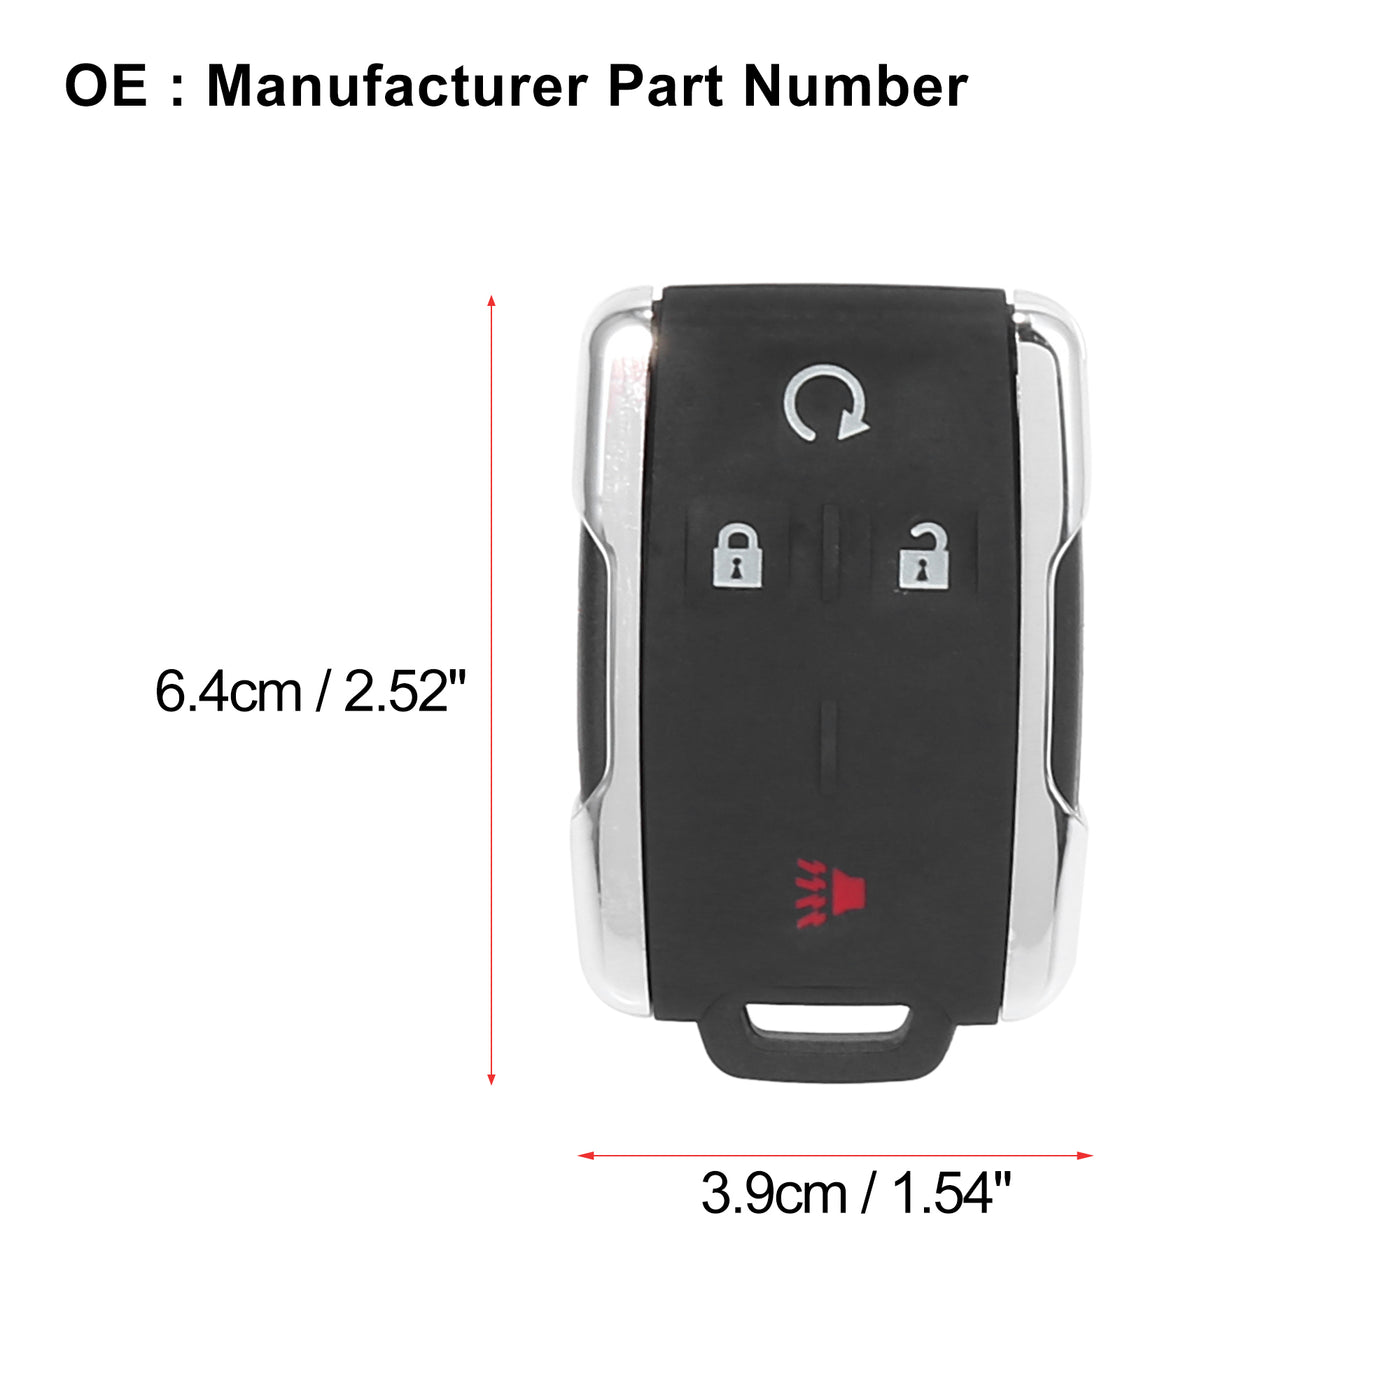 X AUTOHAUX Keyless Entry Remote Car Key Fob 315Mhz M3N32337100 for Chevrolet Silverado 2014-2019